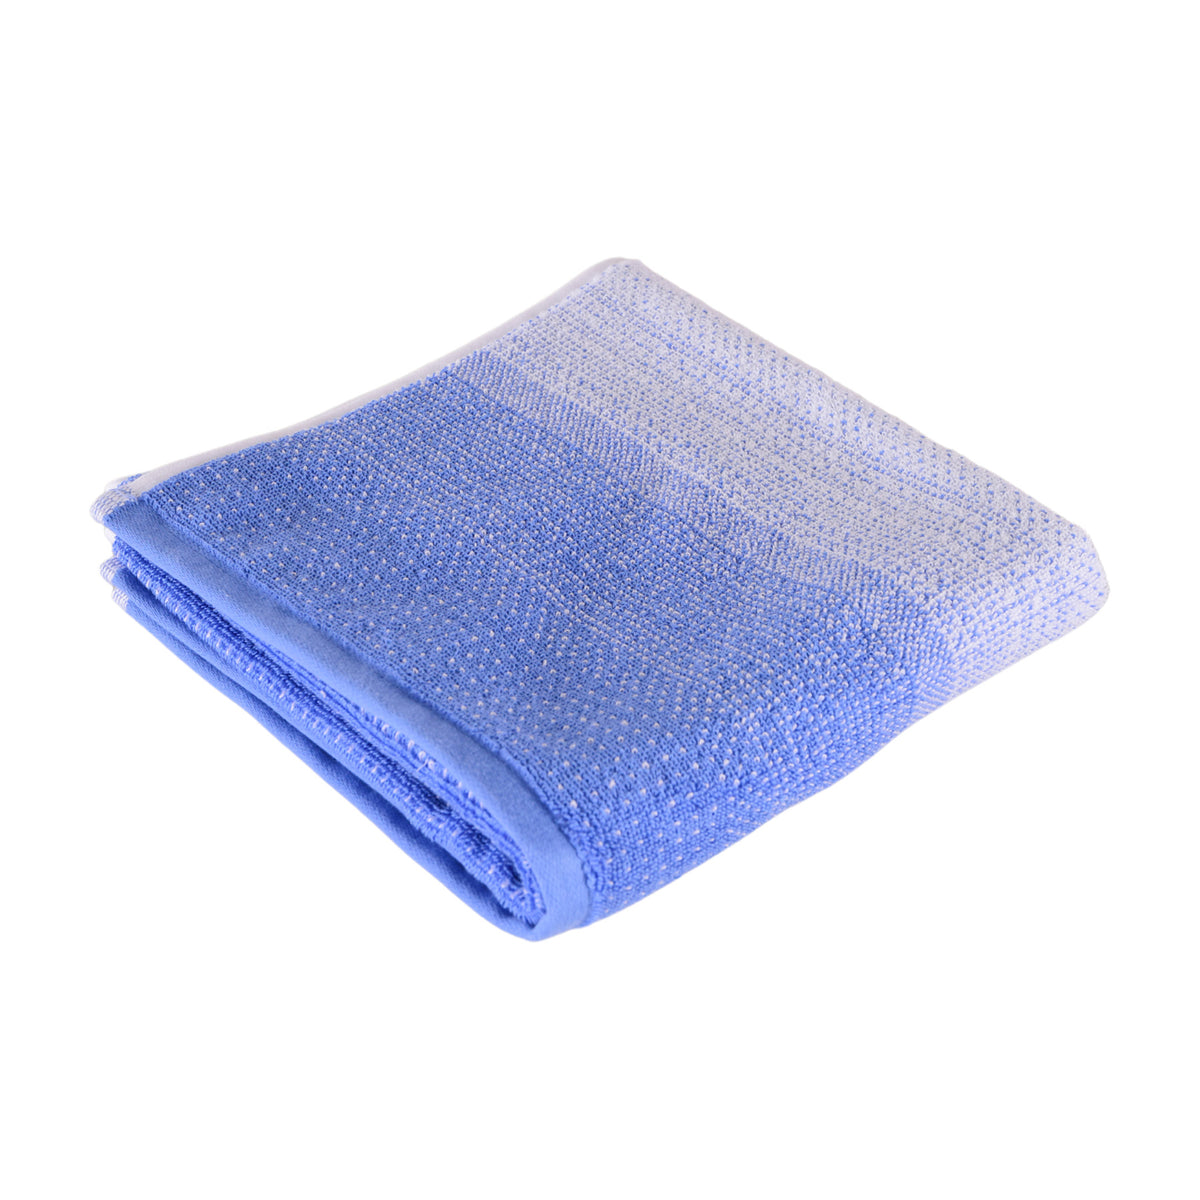 Stripe line towel 50x100 cm